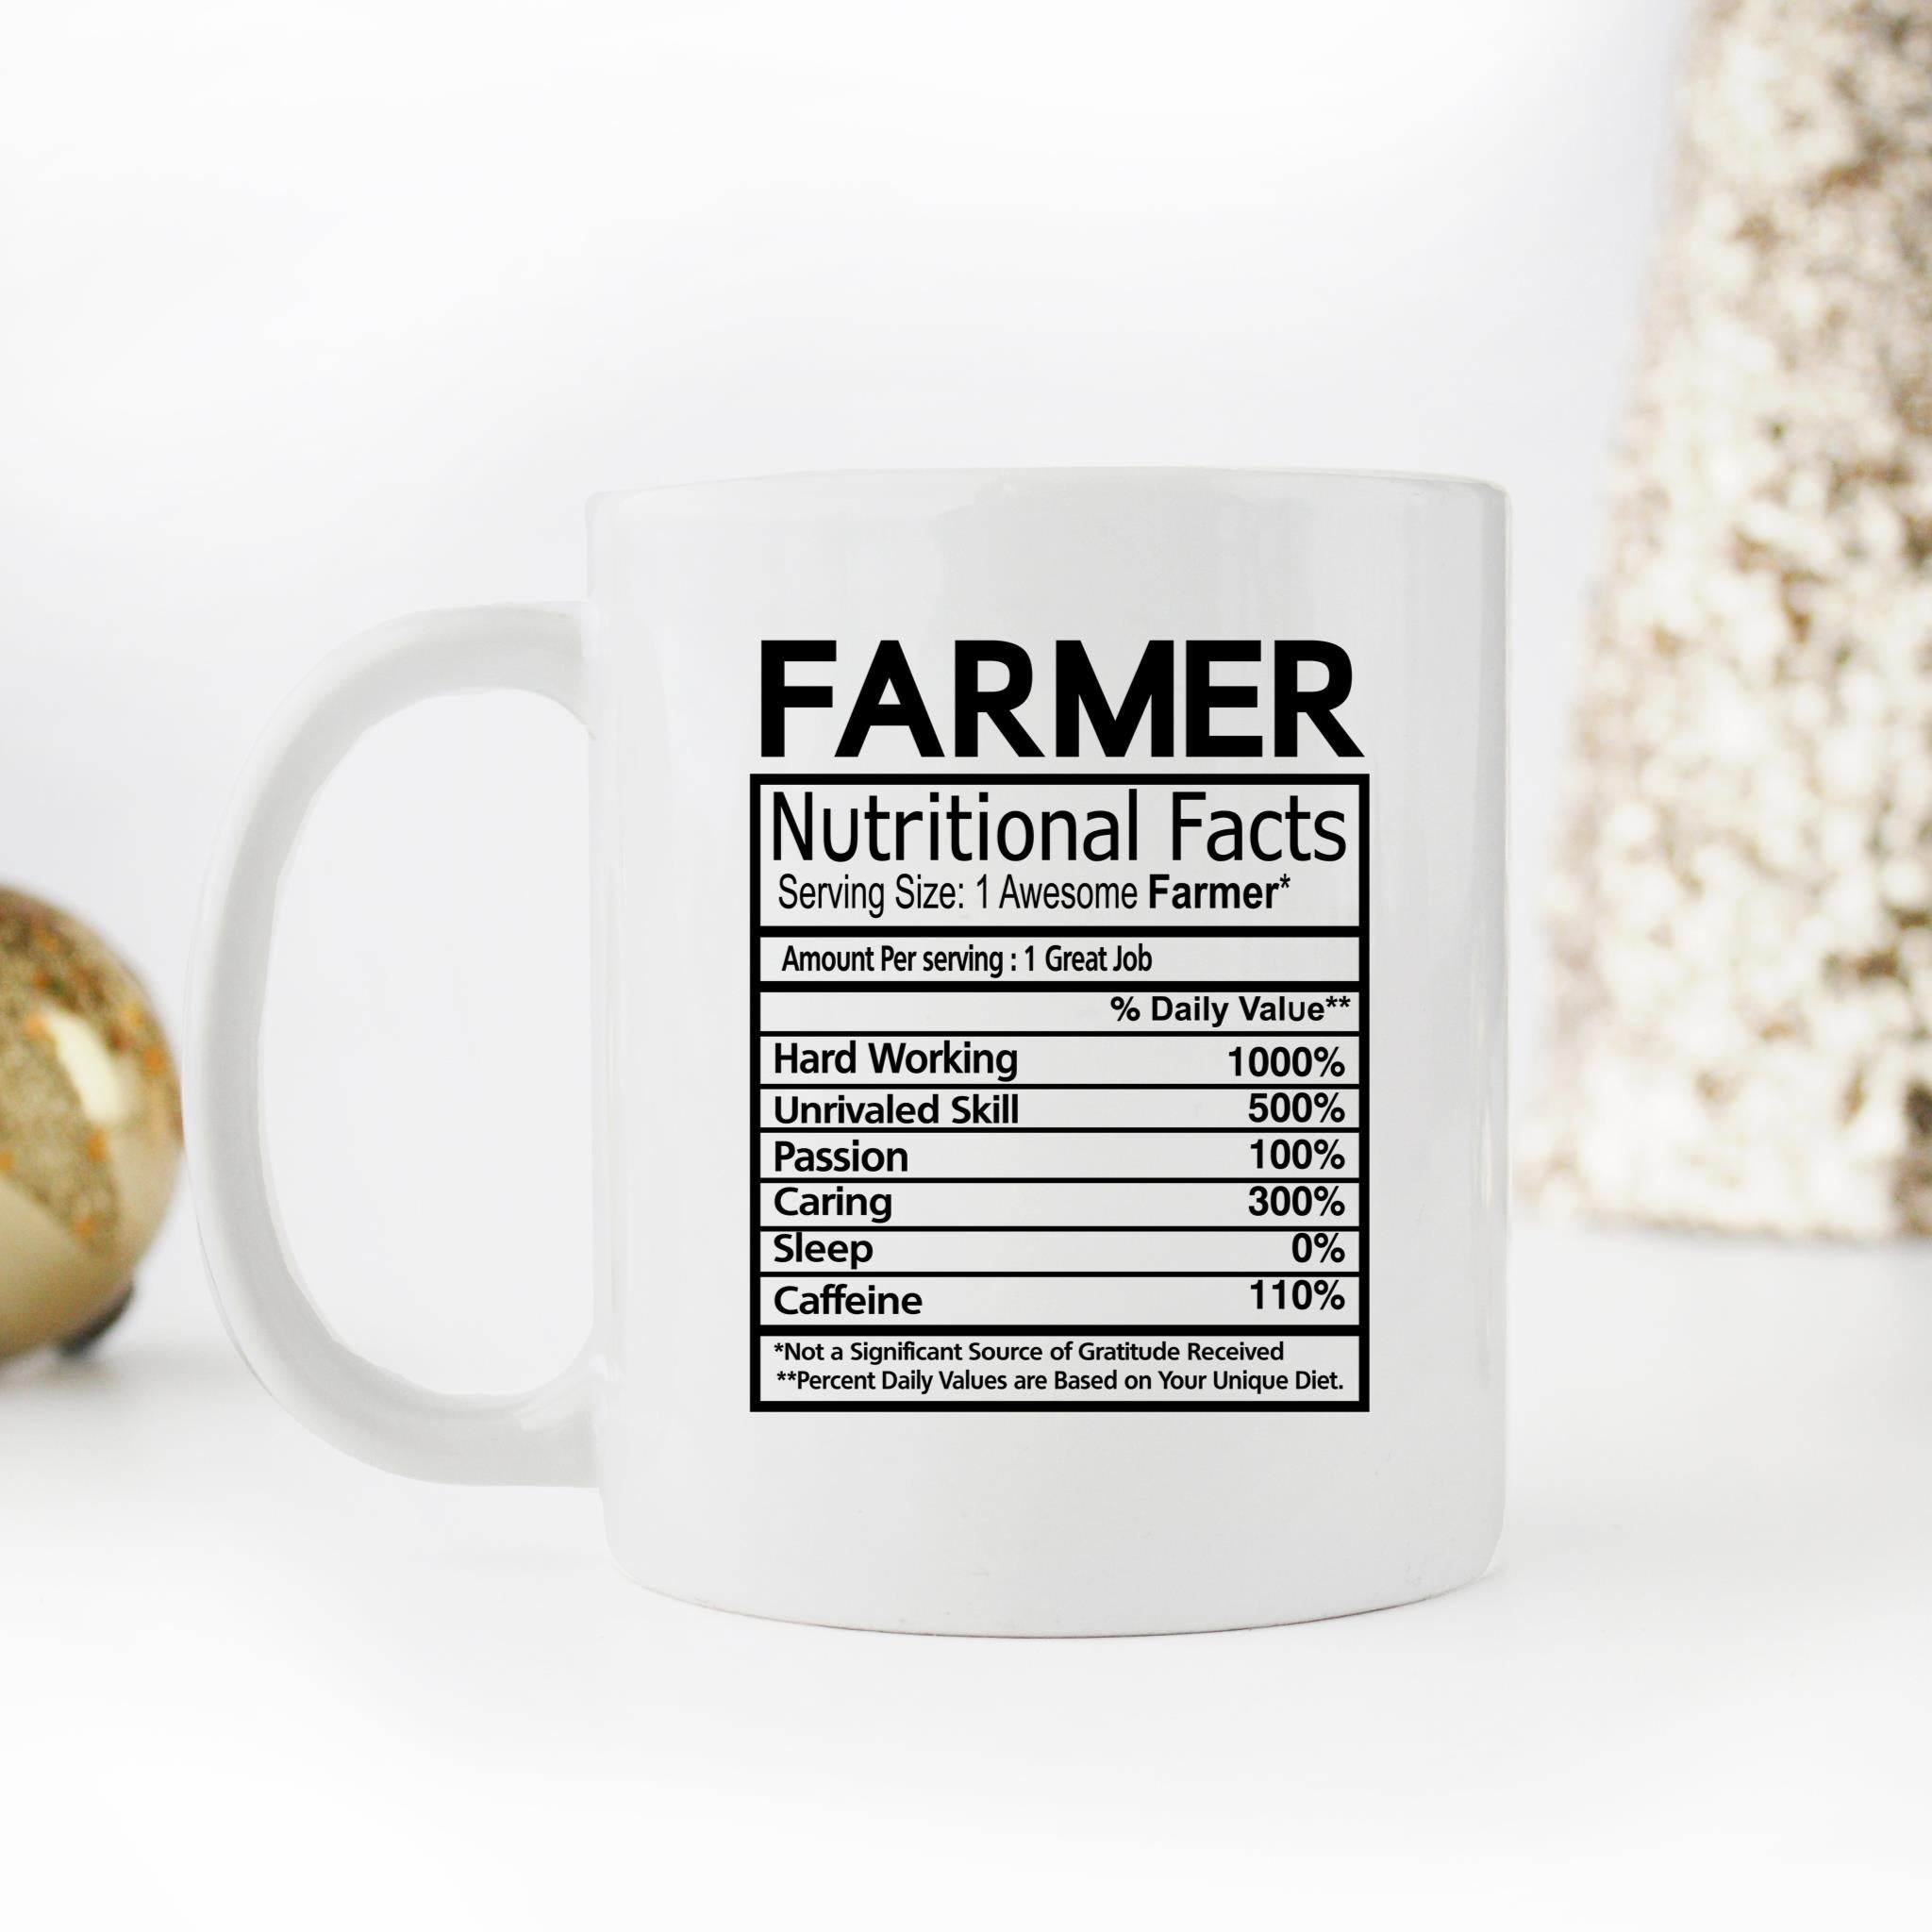 Skitongifts Funny Ceramic Novelty Coffee Mug Farmer Nutritional Facts fOOHqO6